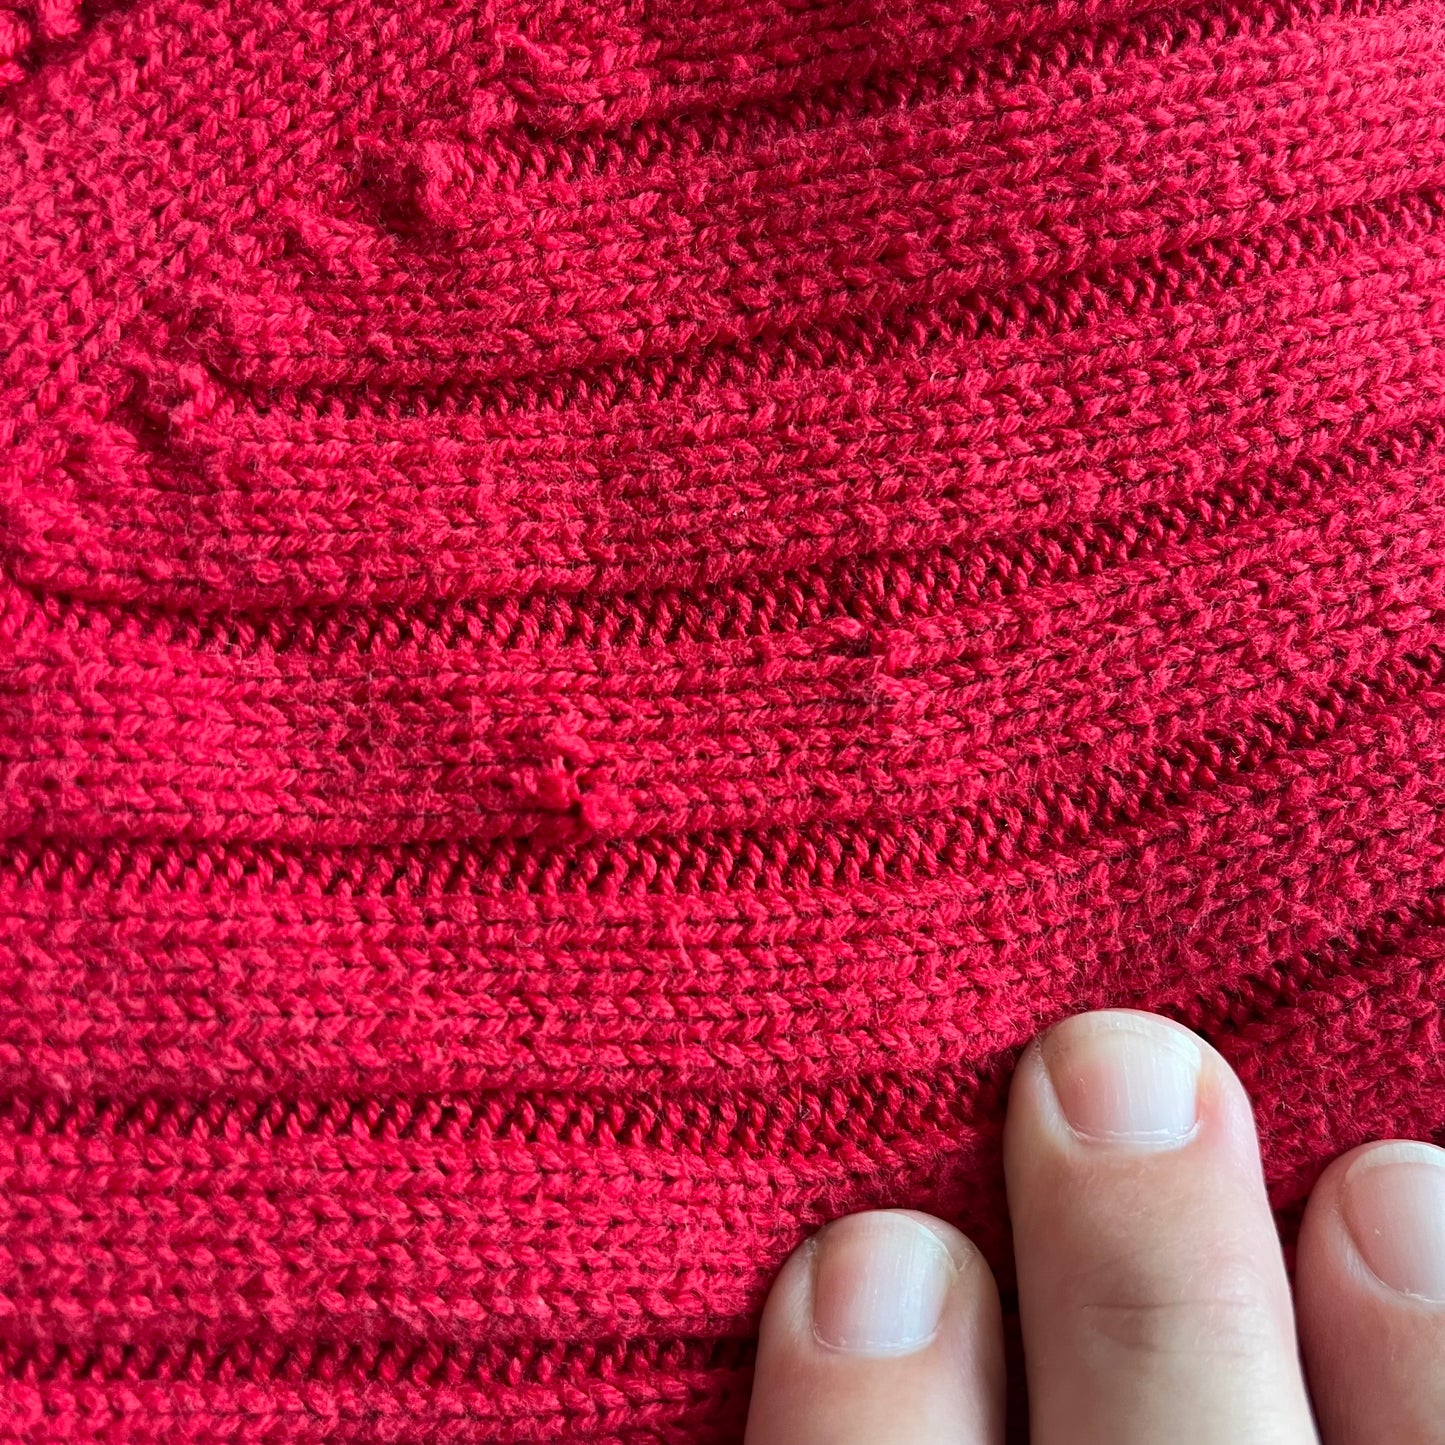 Nautica Red Heavy Knit Sweater